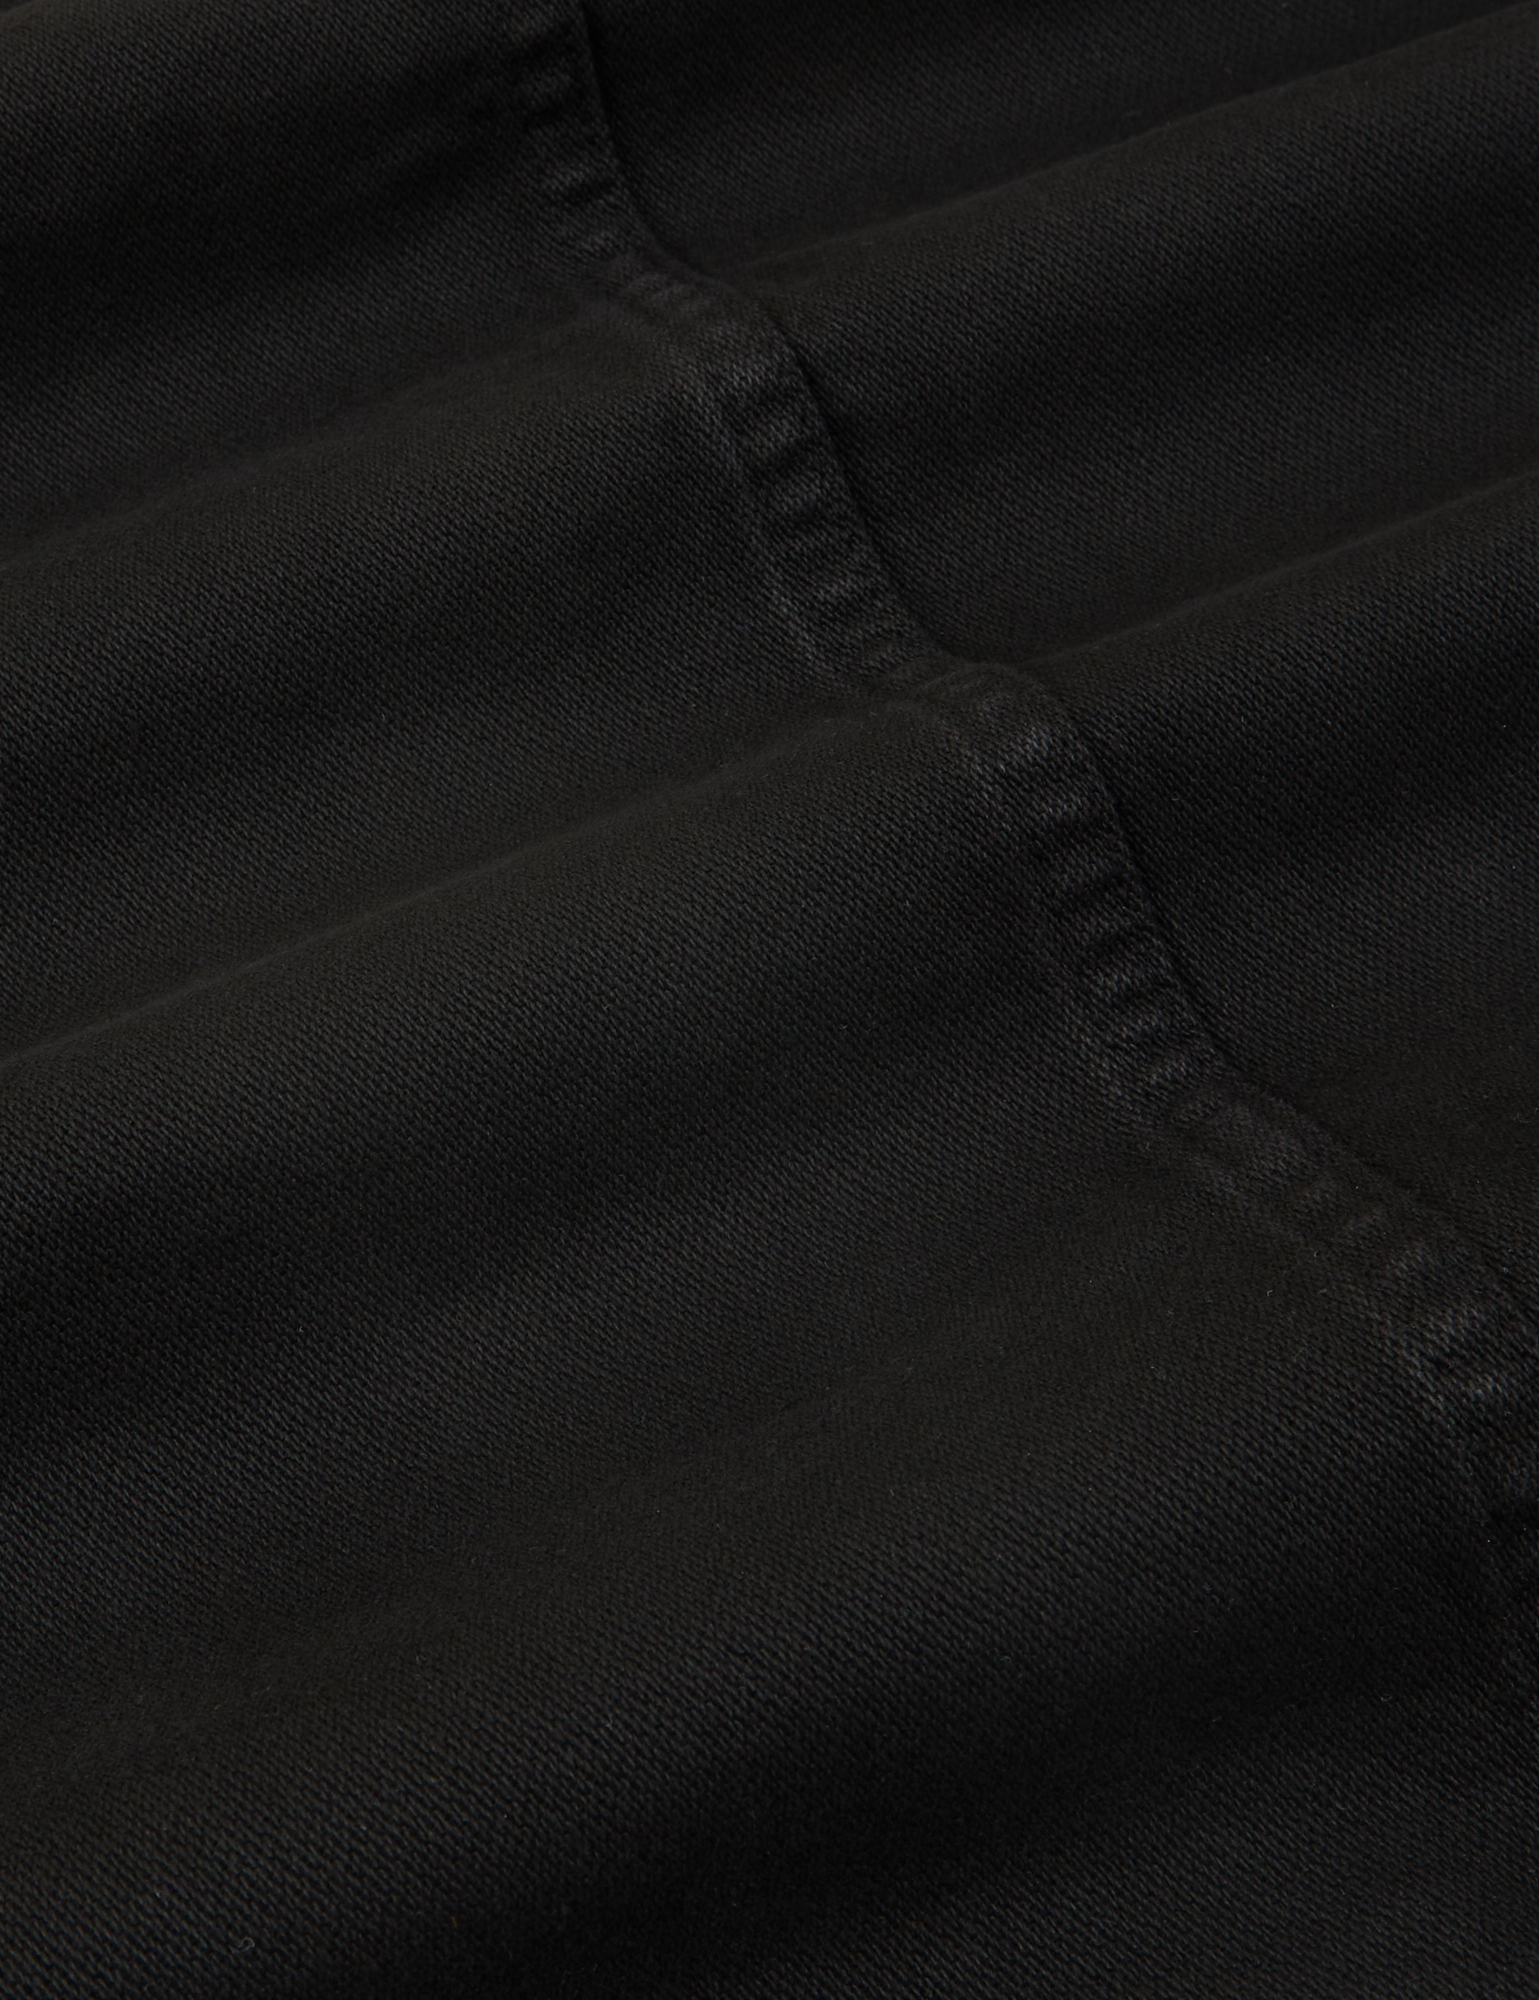 Denim Work Jacket in Basic Black fabric detail